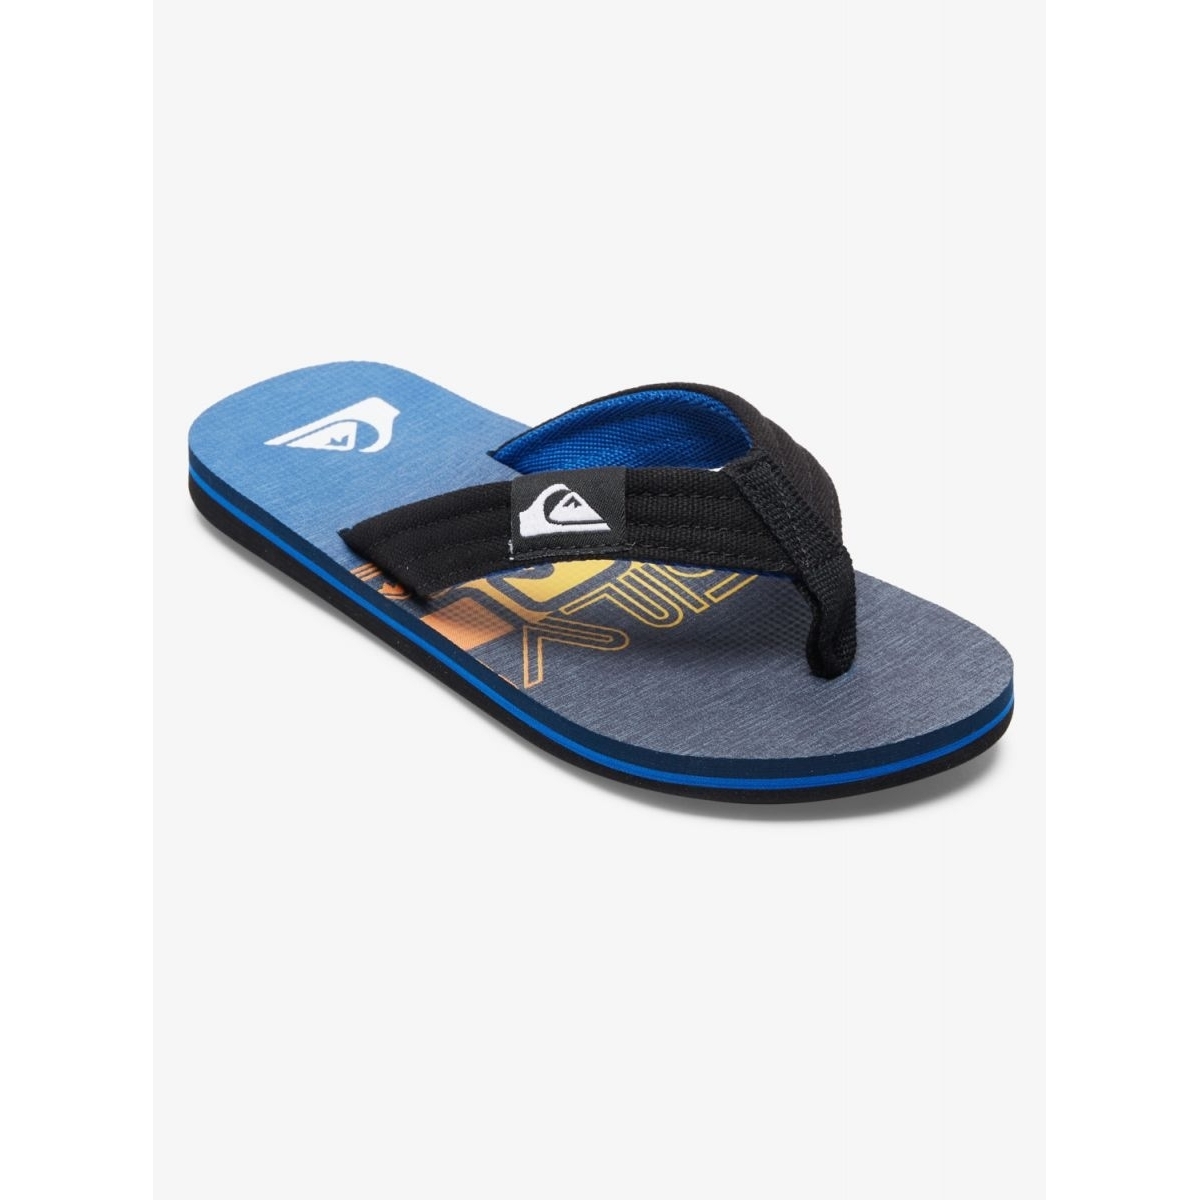 Quiksilver Boys' Molokai Layback Flip Flop Sandals Blue 6 - AQBL100591-BYJ6 BLUE 6 - BLUE 6, 13 Little Kid